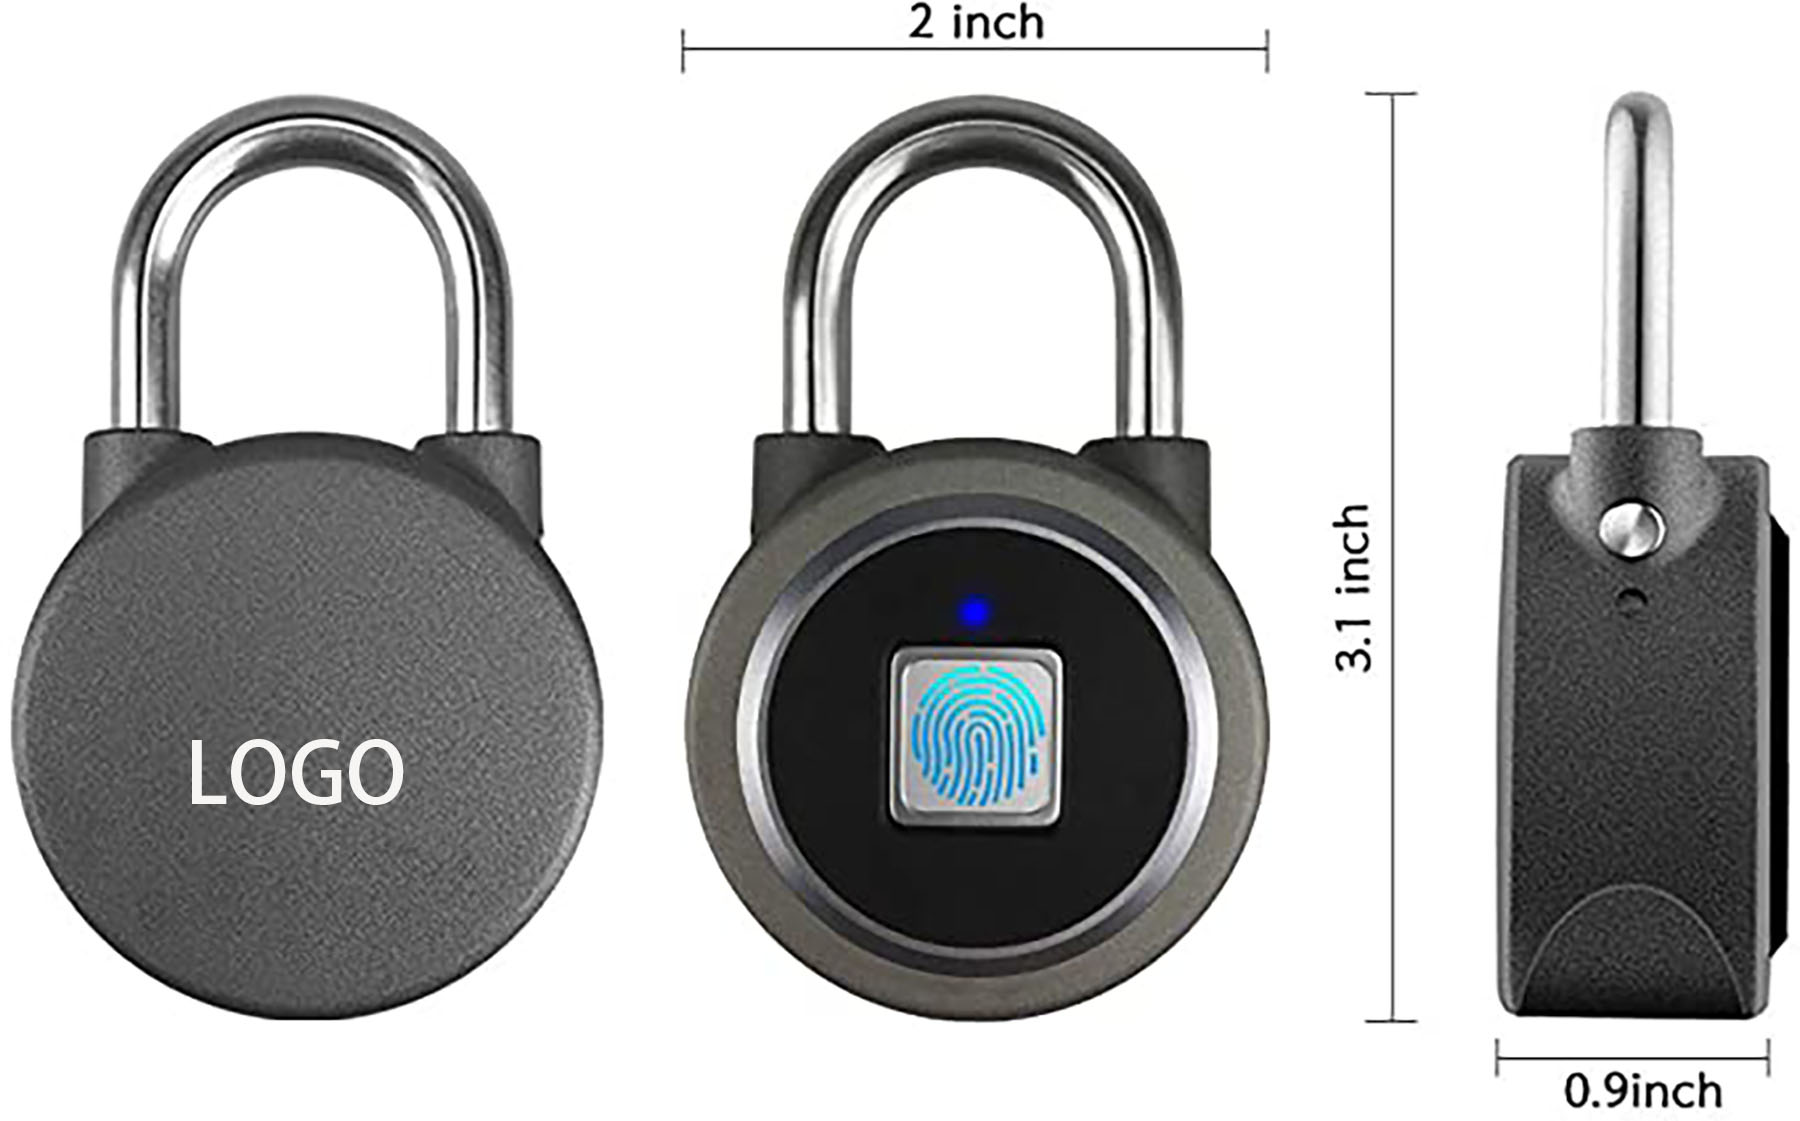 Water Resistant Fingerprint Padlock Suitable for Gym/Sports/ Bike/School/Locker/Storage